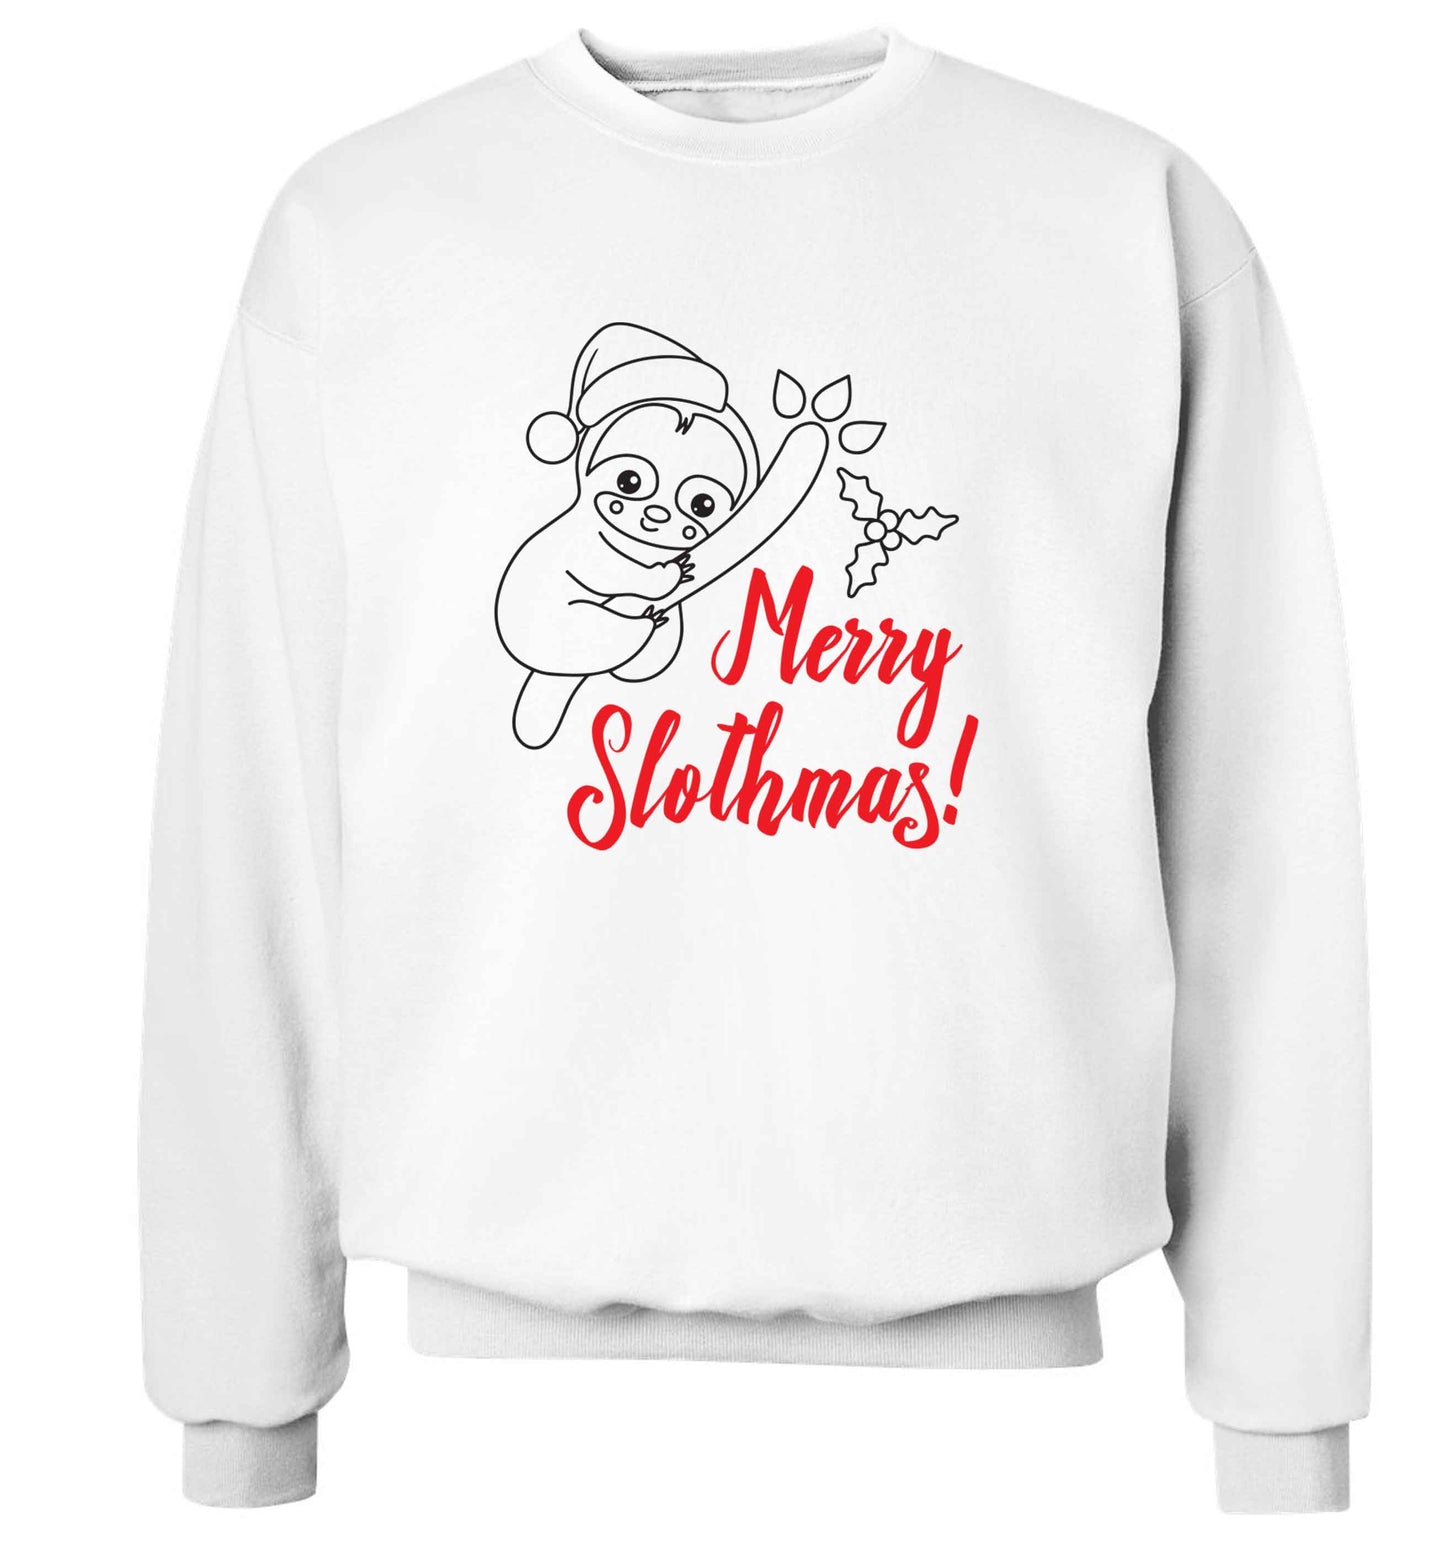 Merry Slothmas adult's unisex white sweater 2XL